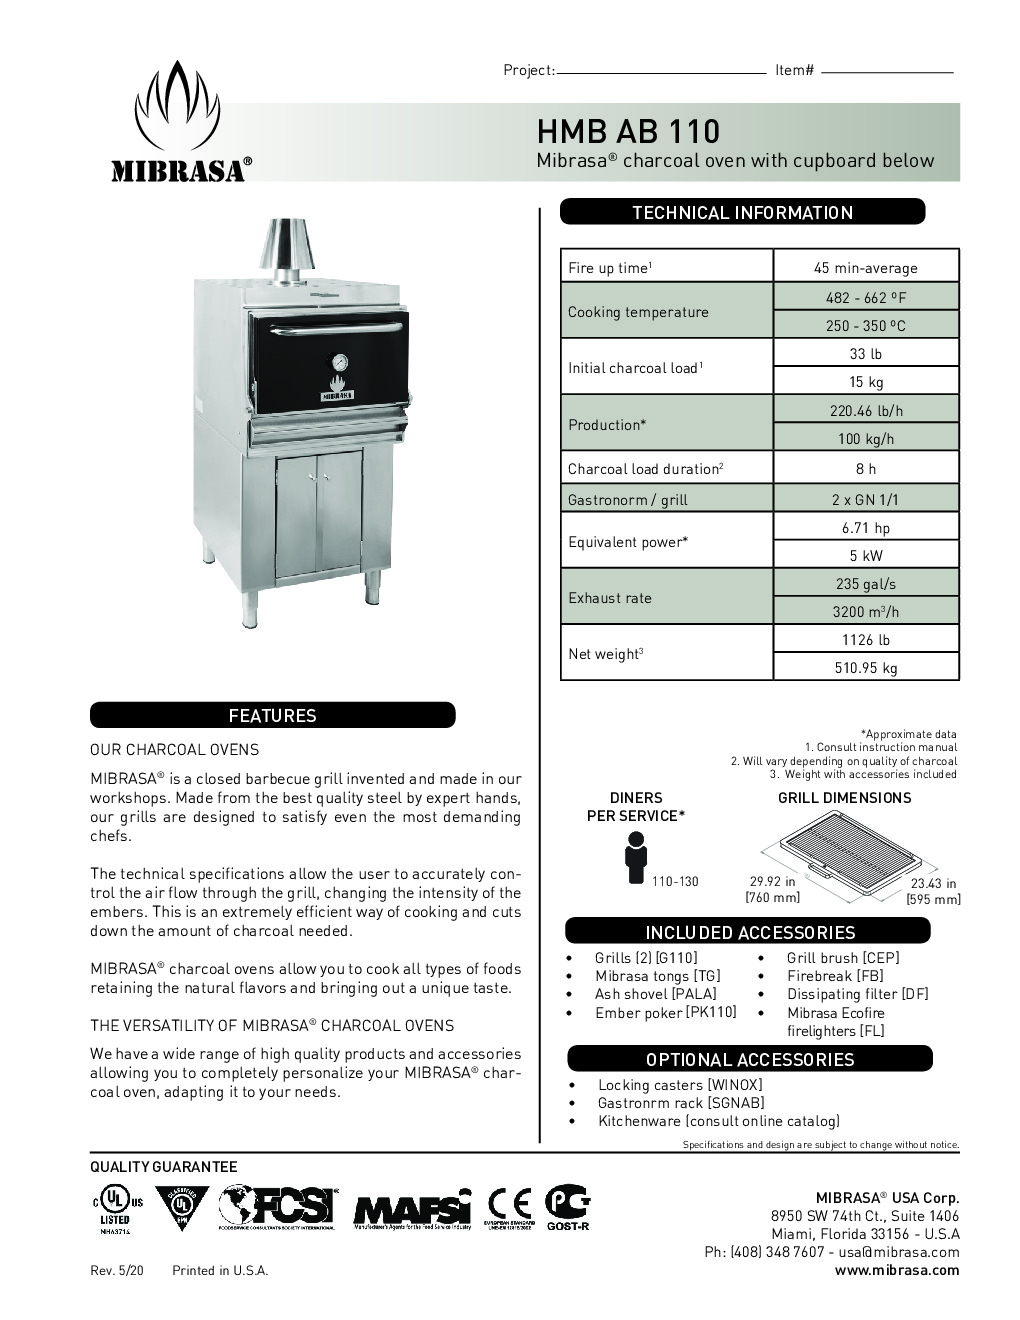 Mibrasa HMB AB 110 Charcoal Broiler Oven